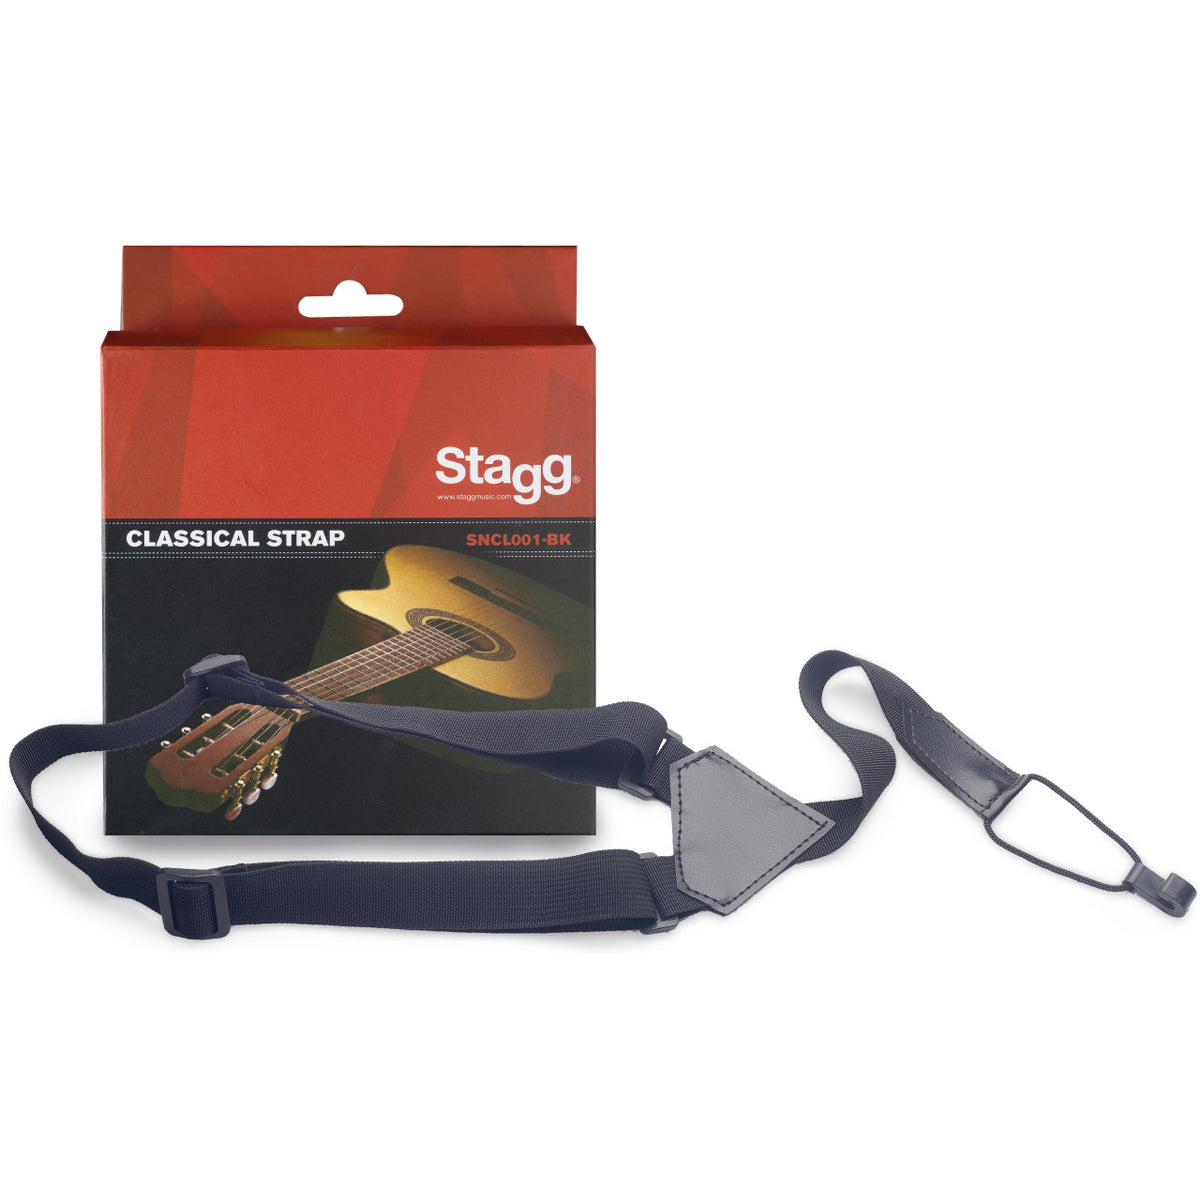 Stagg Nylon Strap for Classical Guitar - Black